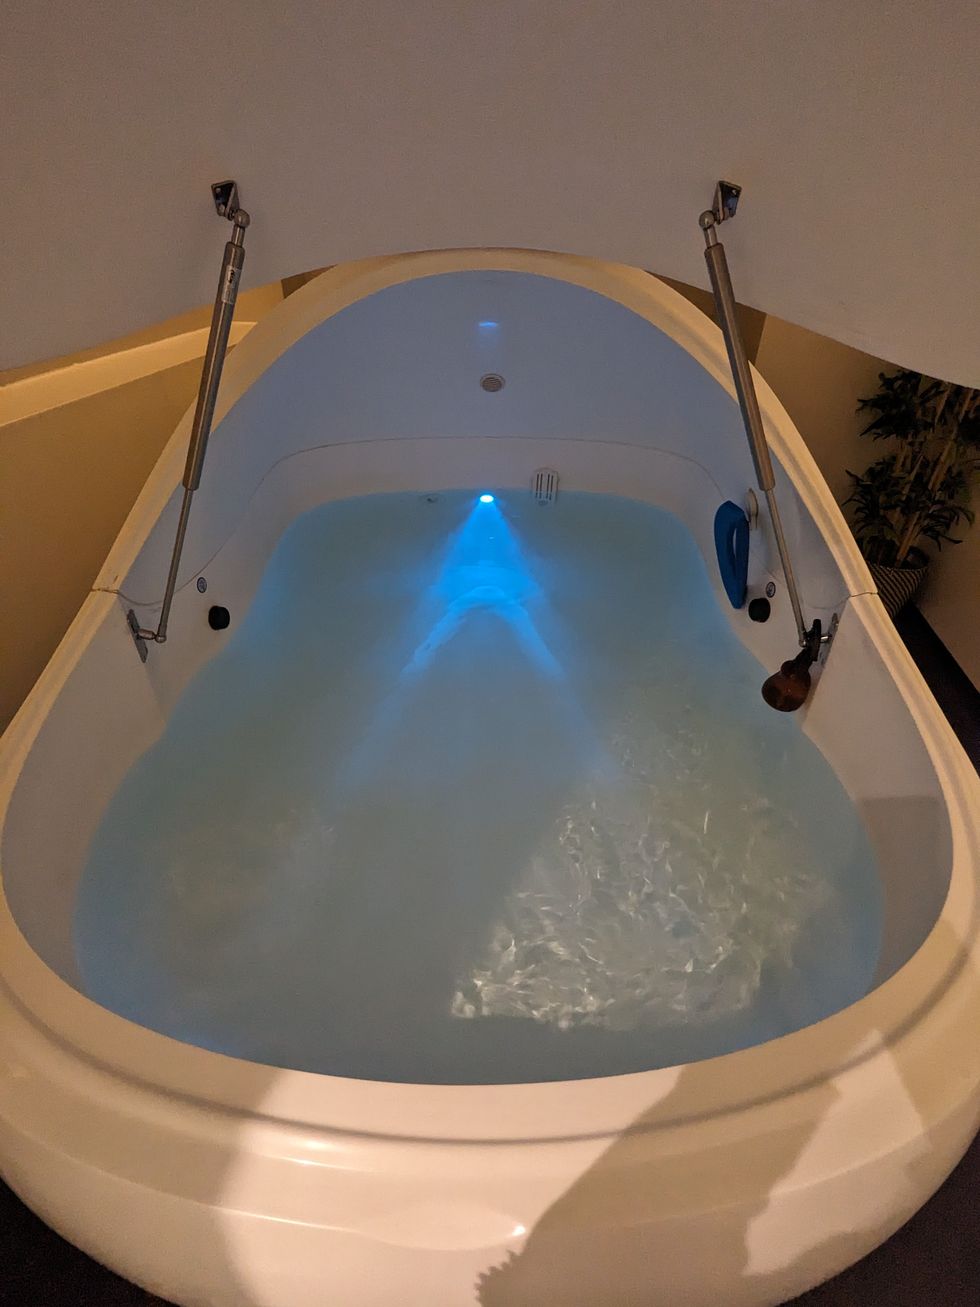 a large round white tub